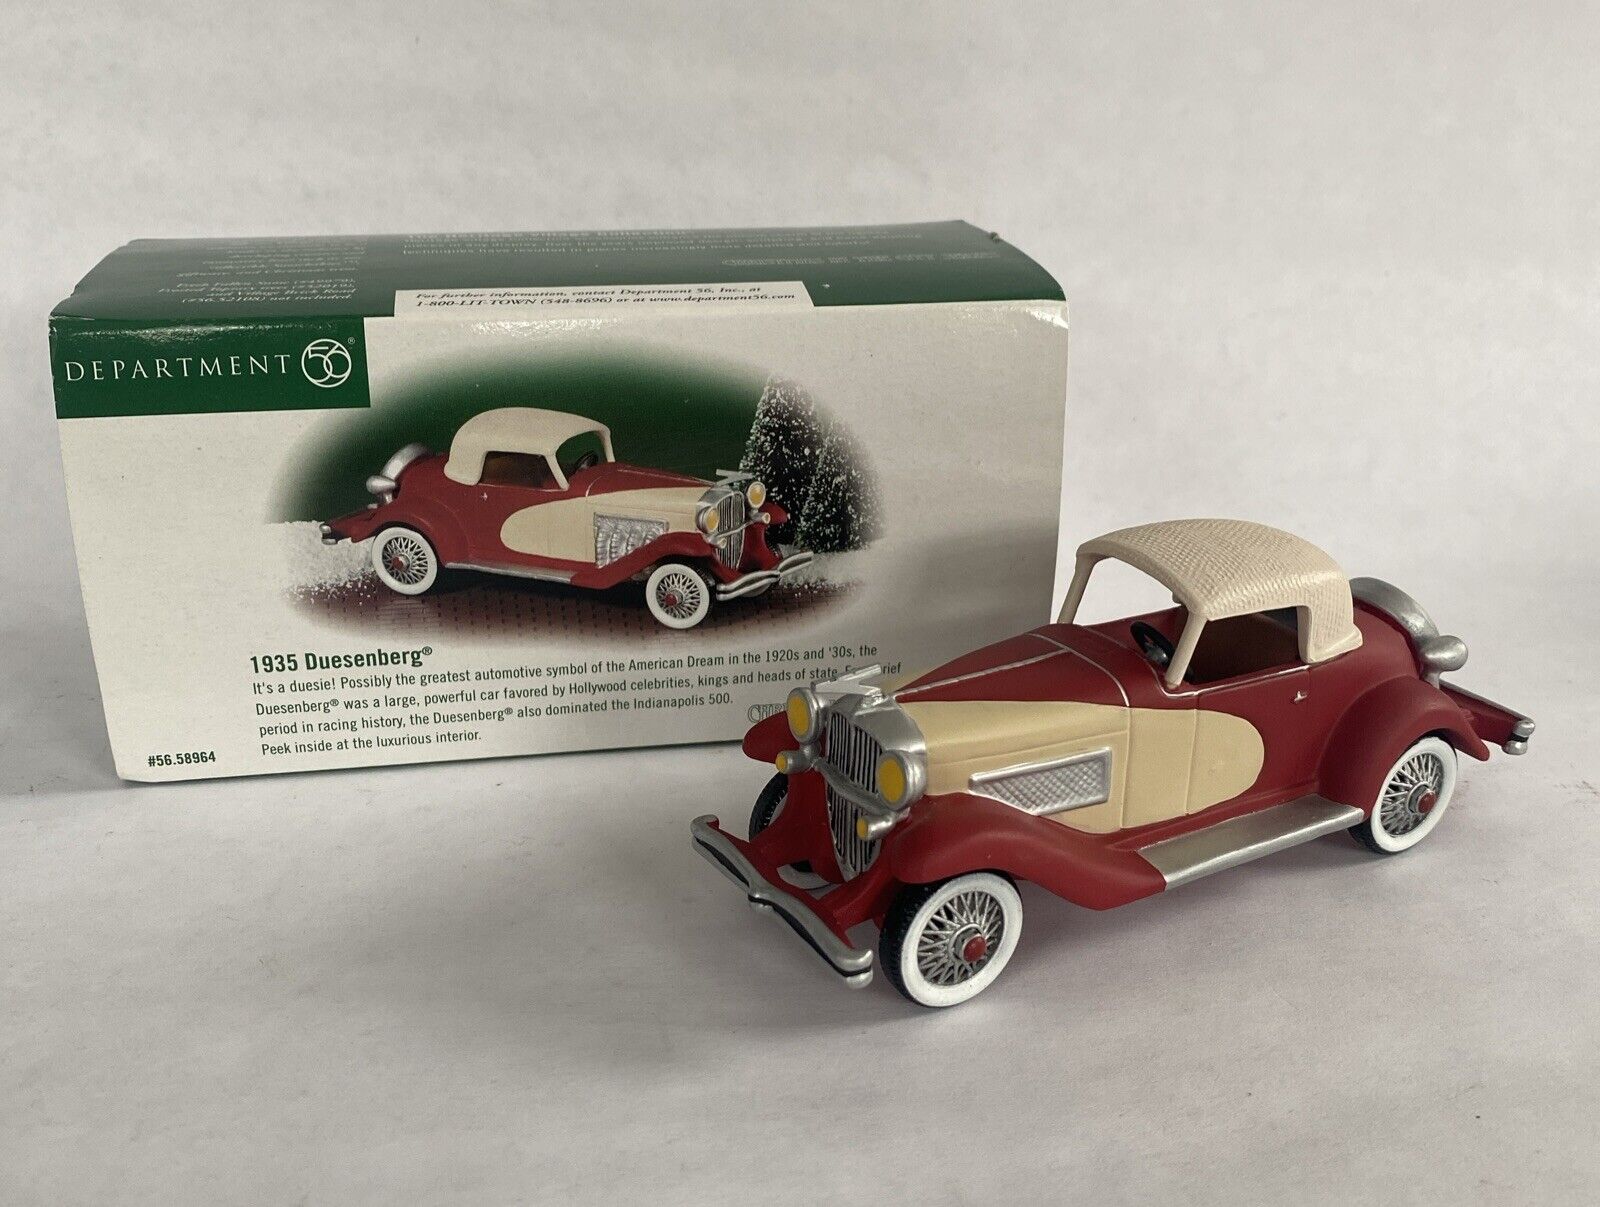 1935 Duesenberg 58964 Christmas In The City Village Car Department Dept 56